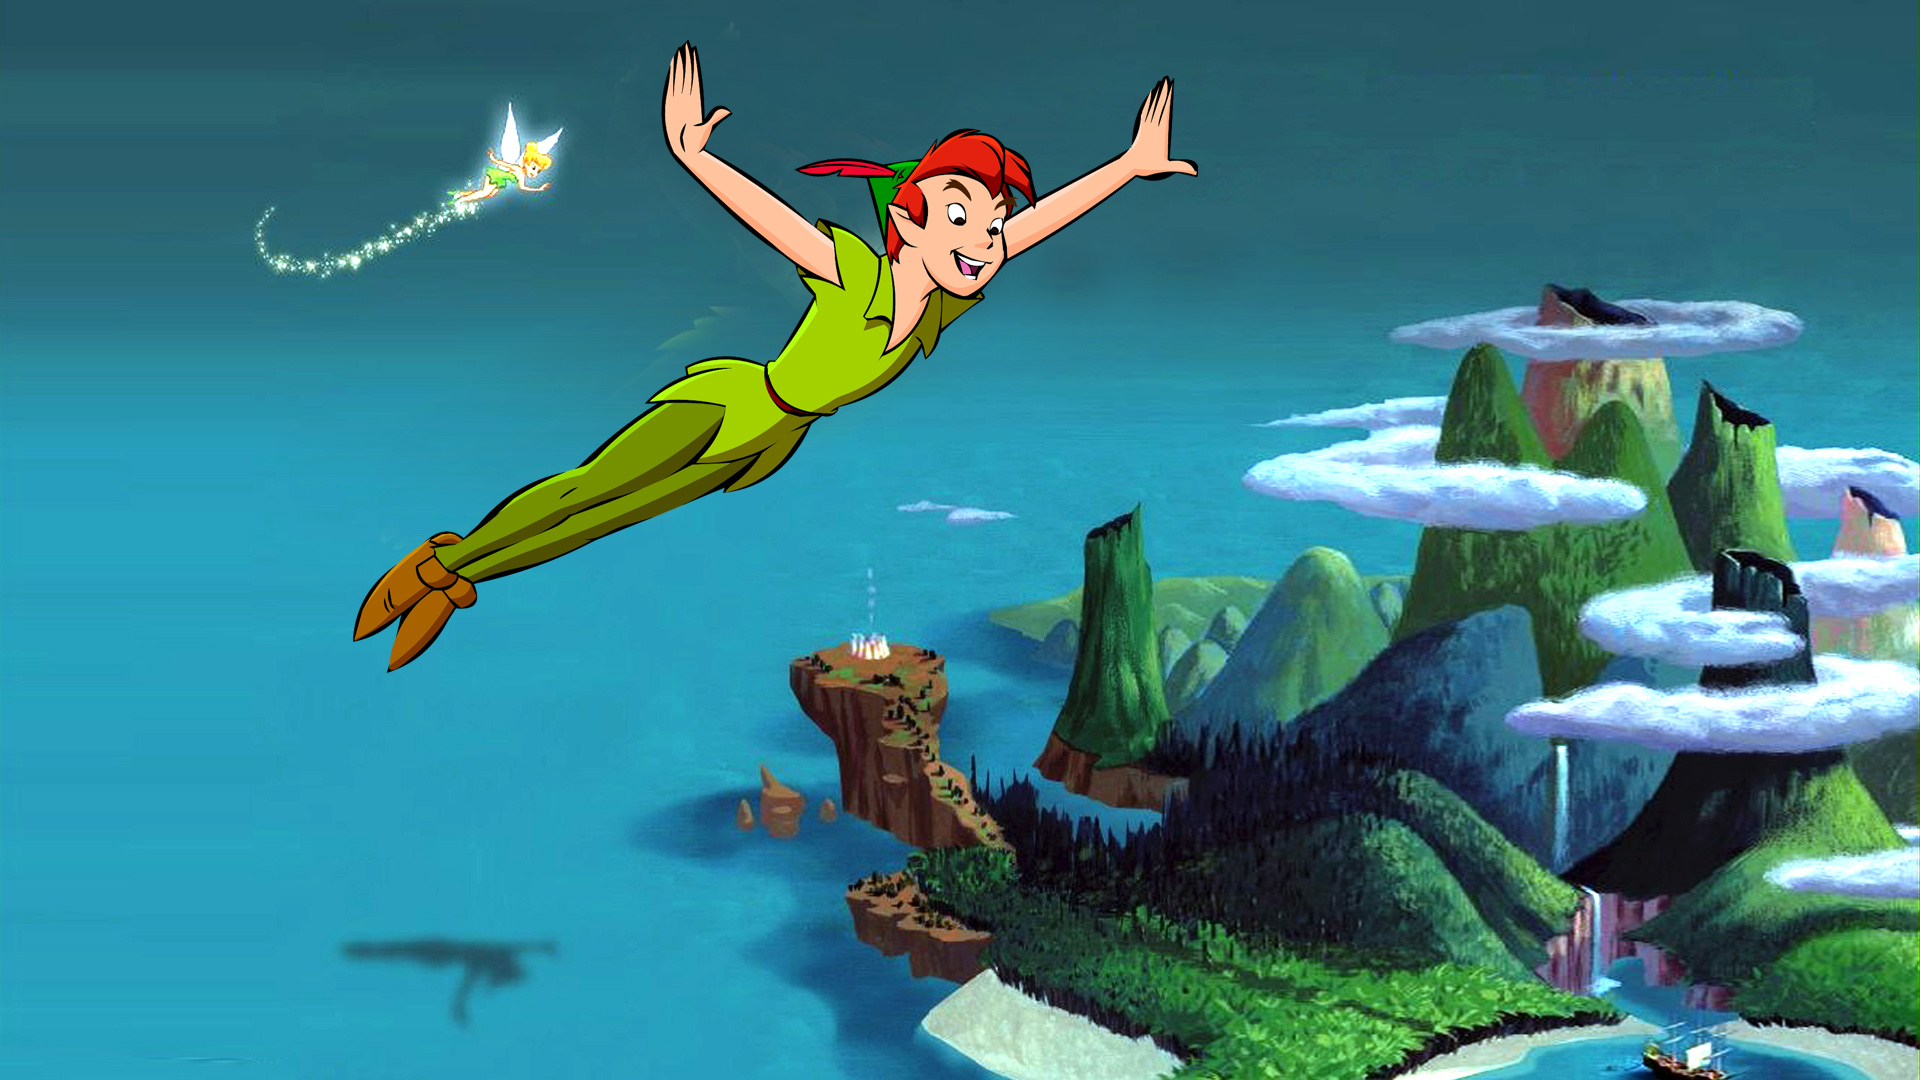 Peter Pan And Tinker Bell Cartoon Photo Walpaper Hd 1920x1080